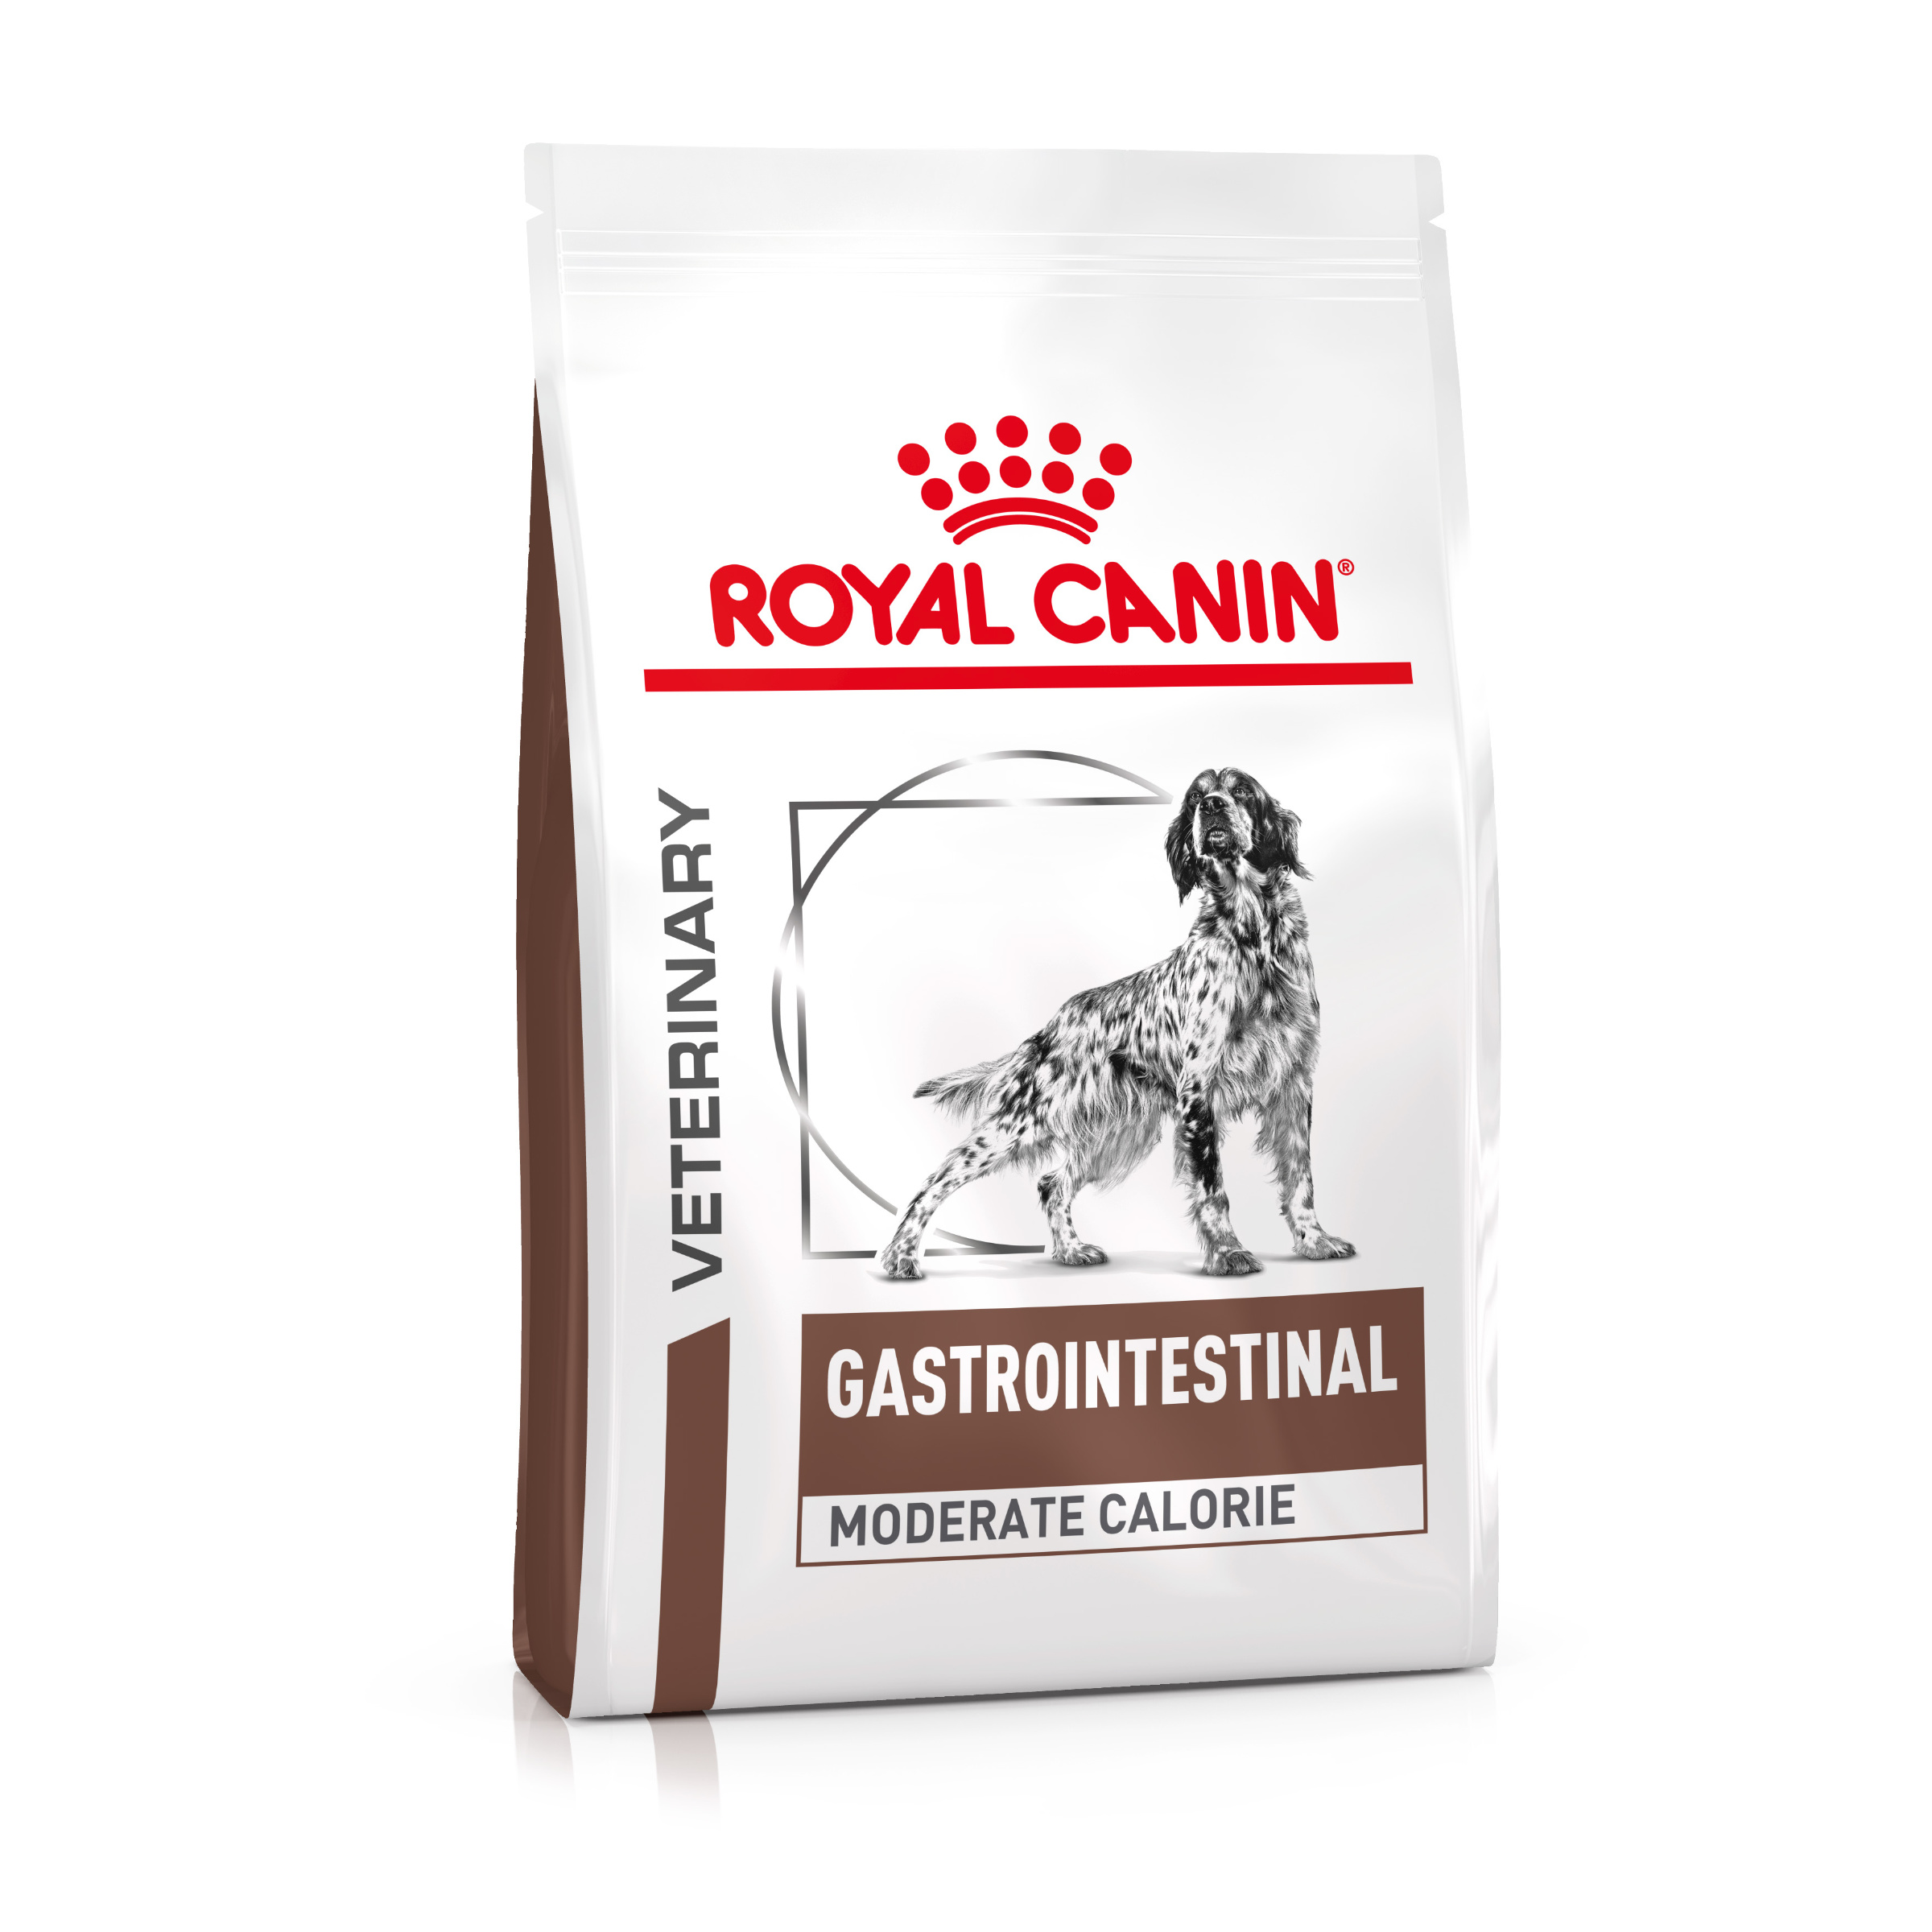 Royal Canin Gastrointestinal Moderate Calorie Trockenfutter Hund 